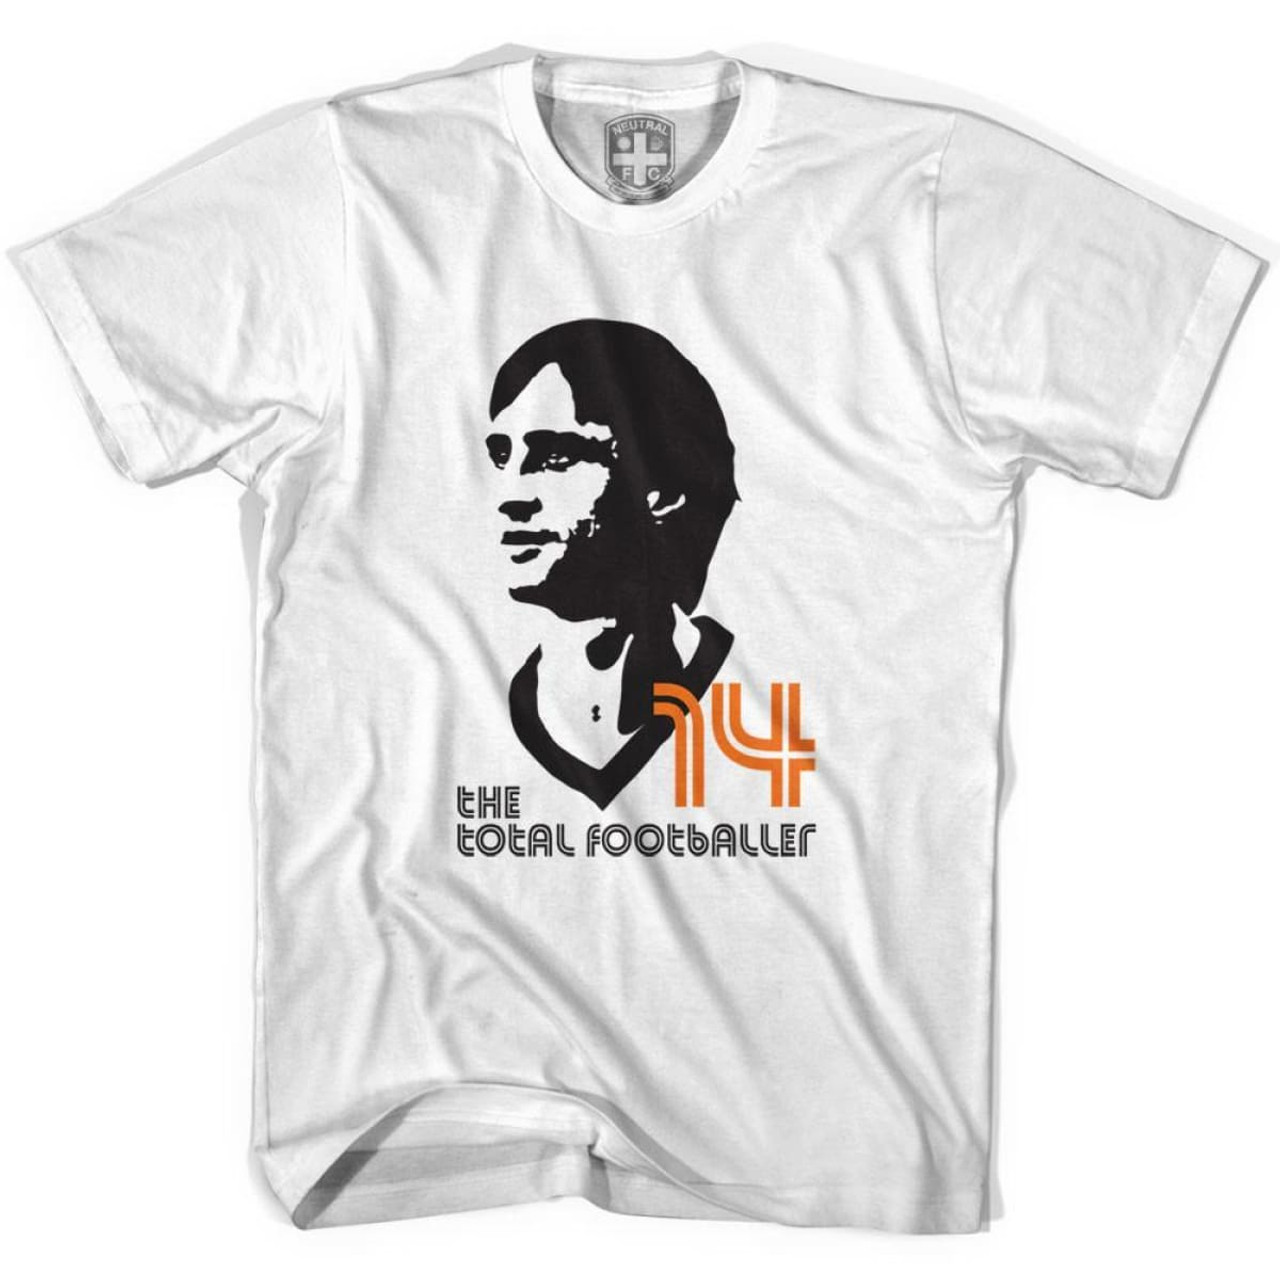 Johan Cruyff 14 Total Footballer T-shirt-Adult-White